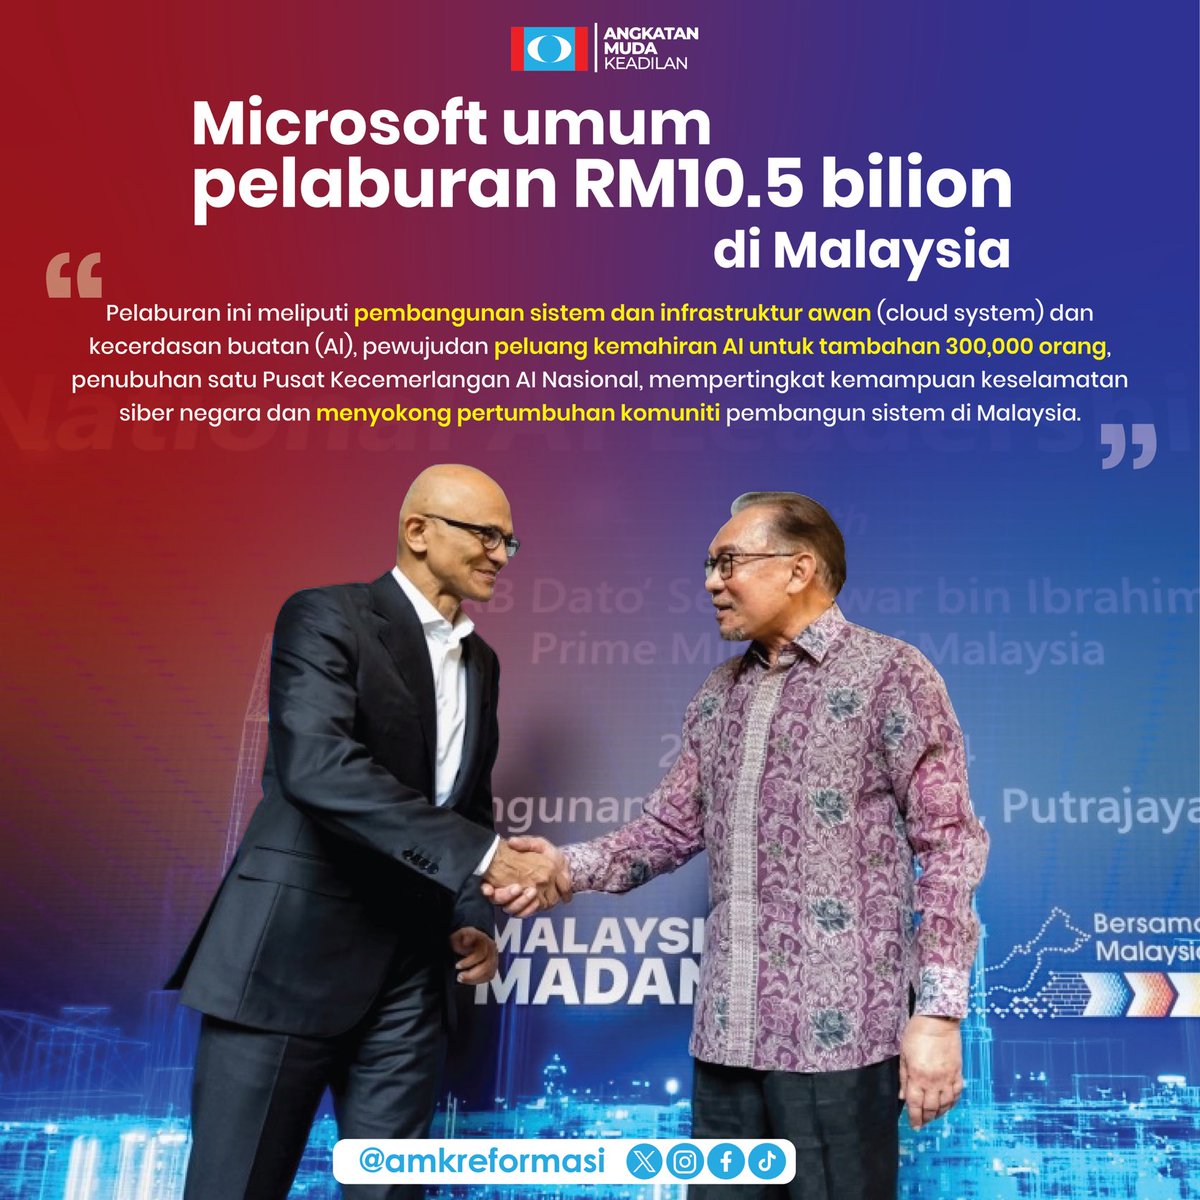 MICROSOFT UMUM PELABURAN RM10.5 BILLION DI MALAYSIA #AMKMALAYSIA #KERAJAANMADANI